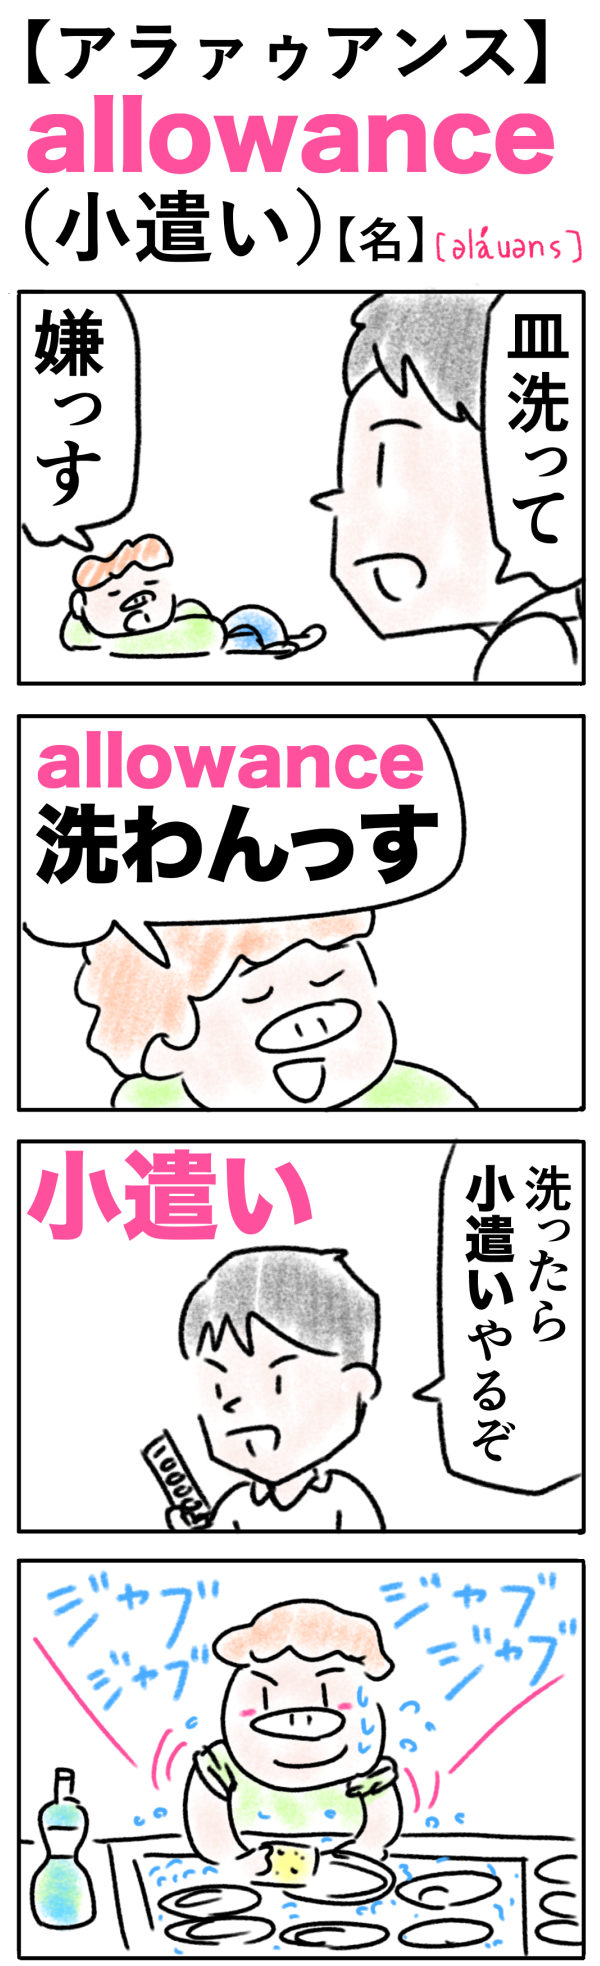 allowance（小遣い） の語呂合わせ英単語